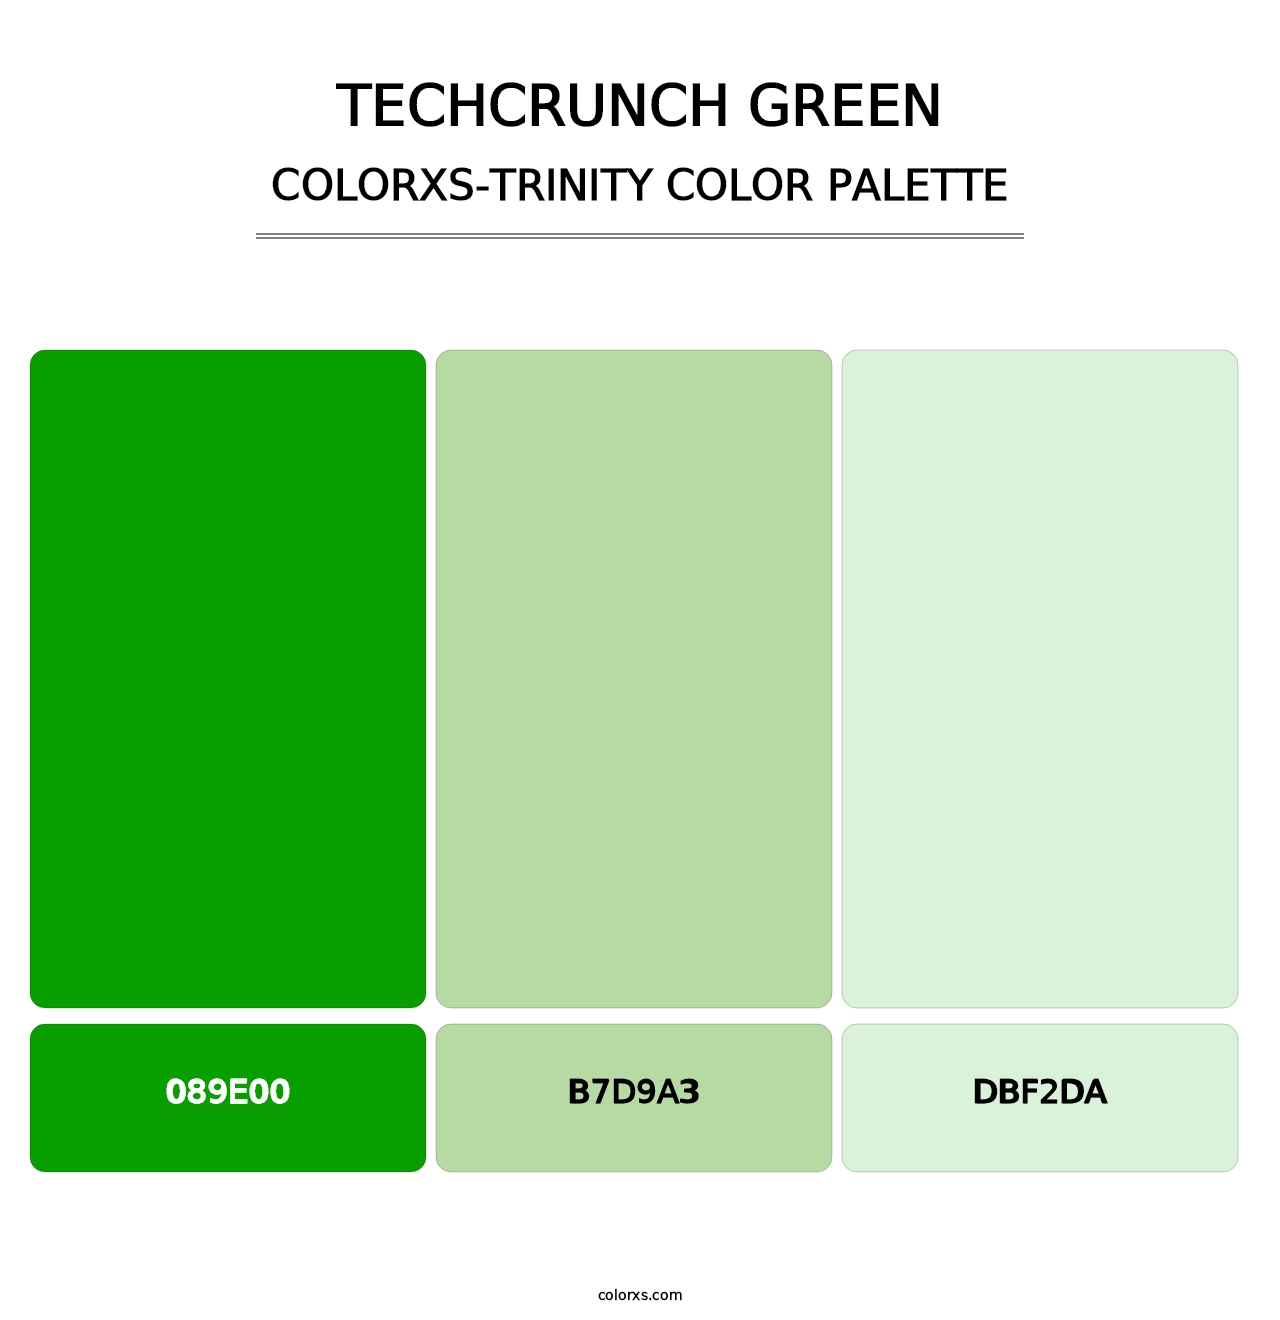 TechCrunch Green - Colorxs Trinity Palette